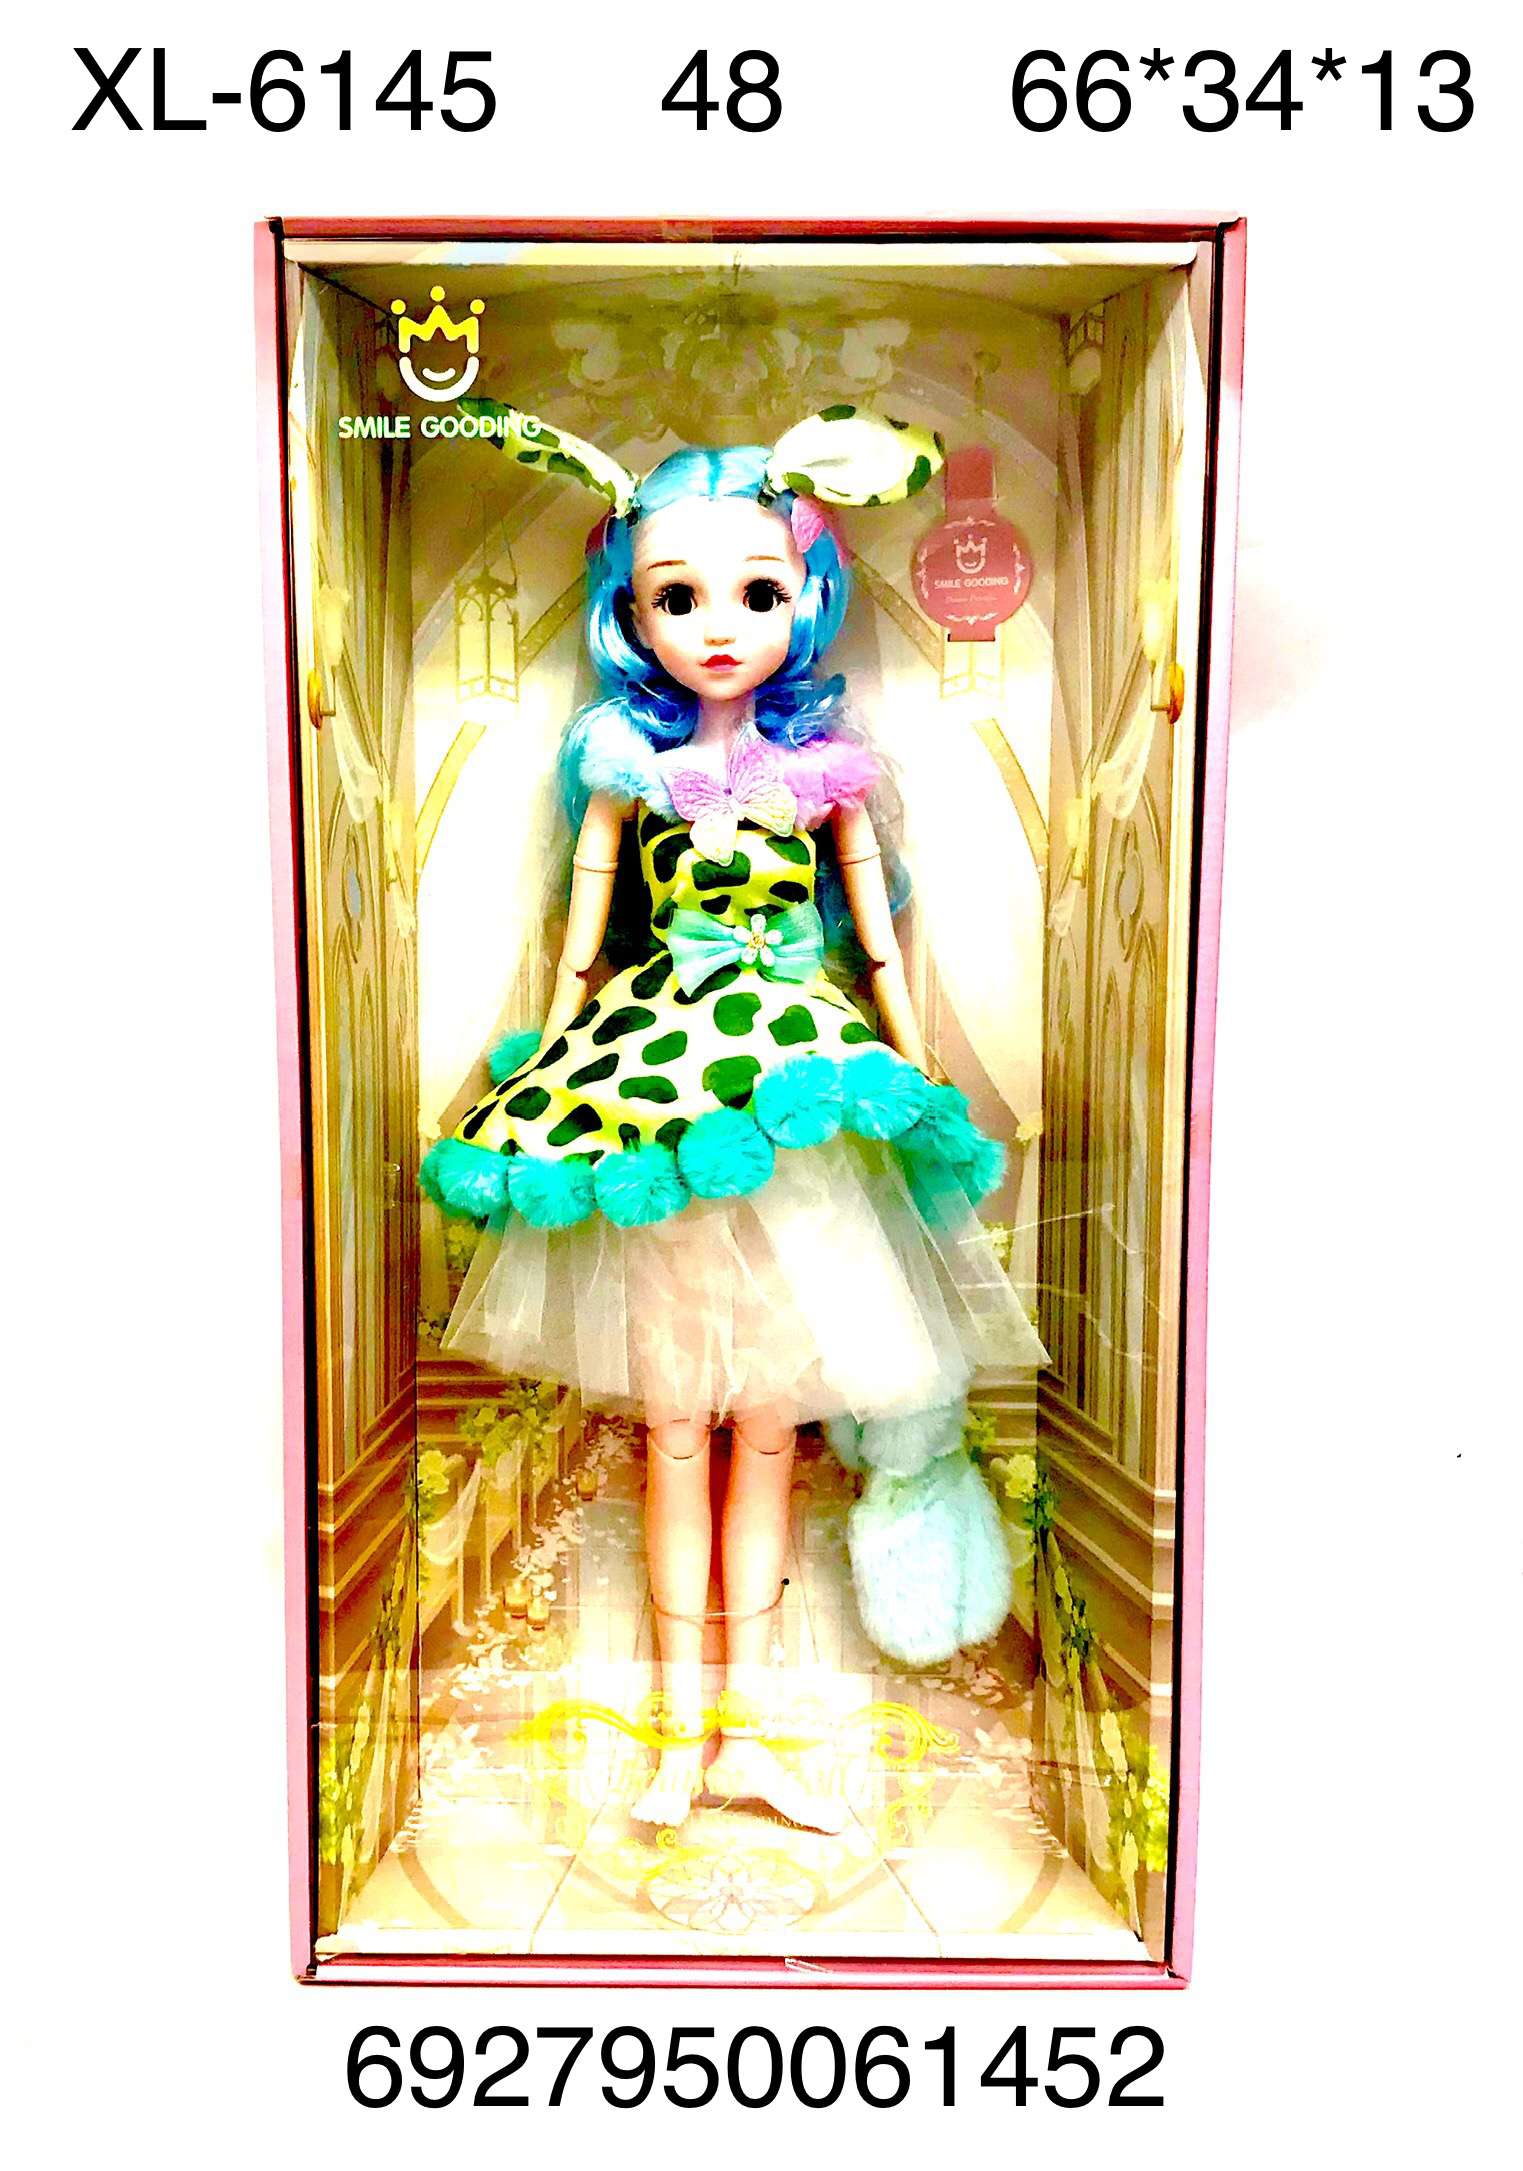 Кукла XL-6145 Smile - Бугульма 